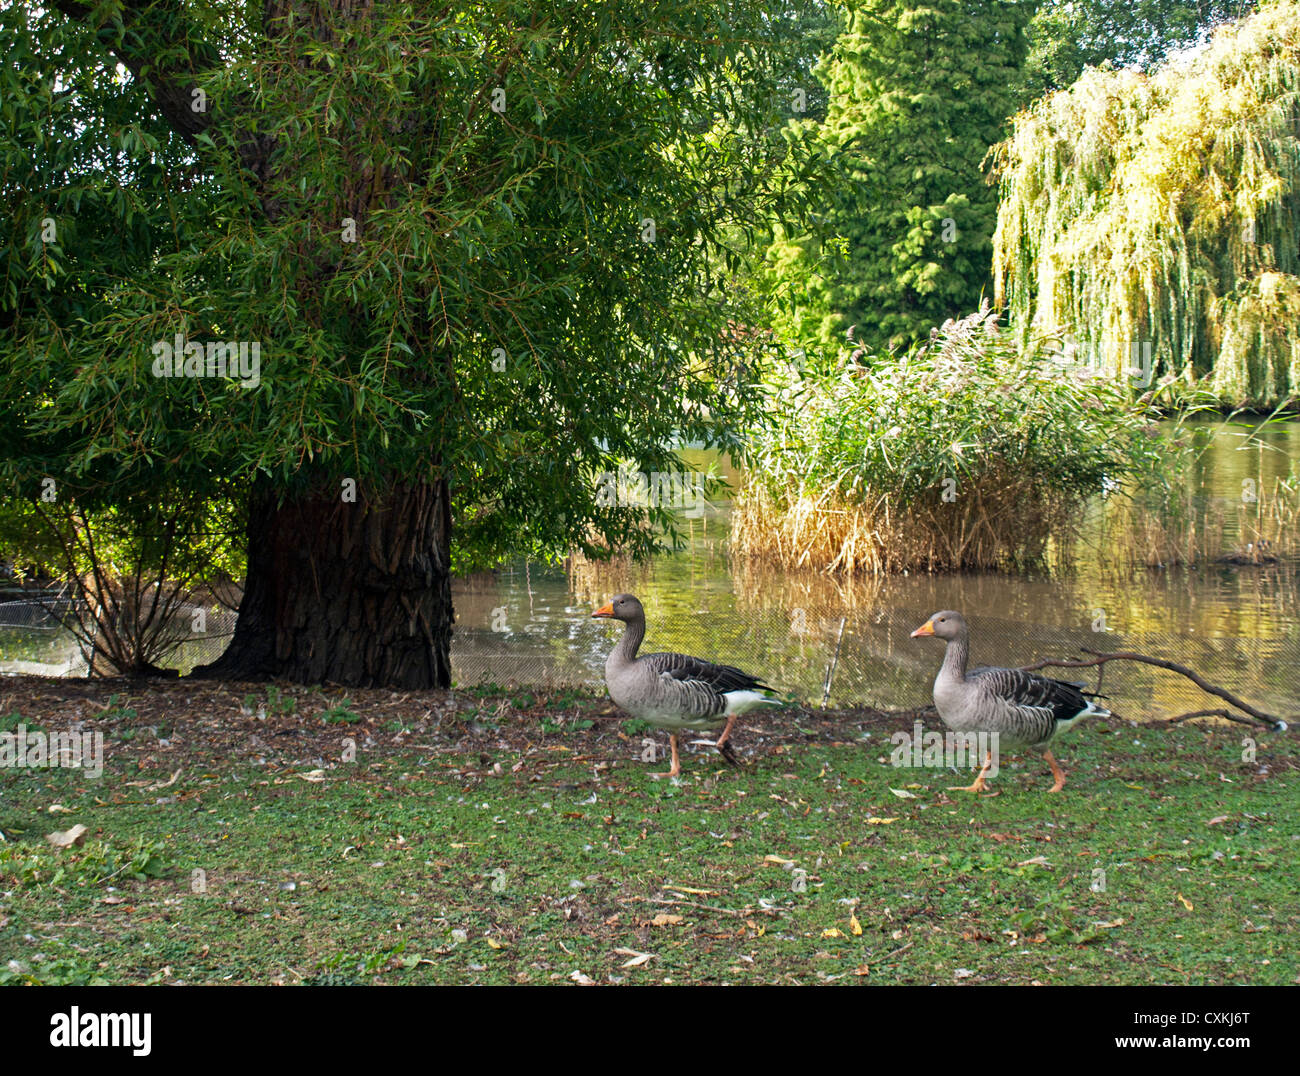 Ducks in St. James Park near lake, City of Westminster, London, England, United Kingdom Stock Photo